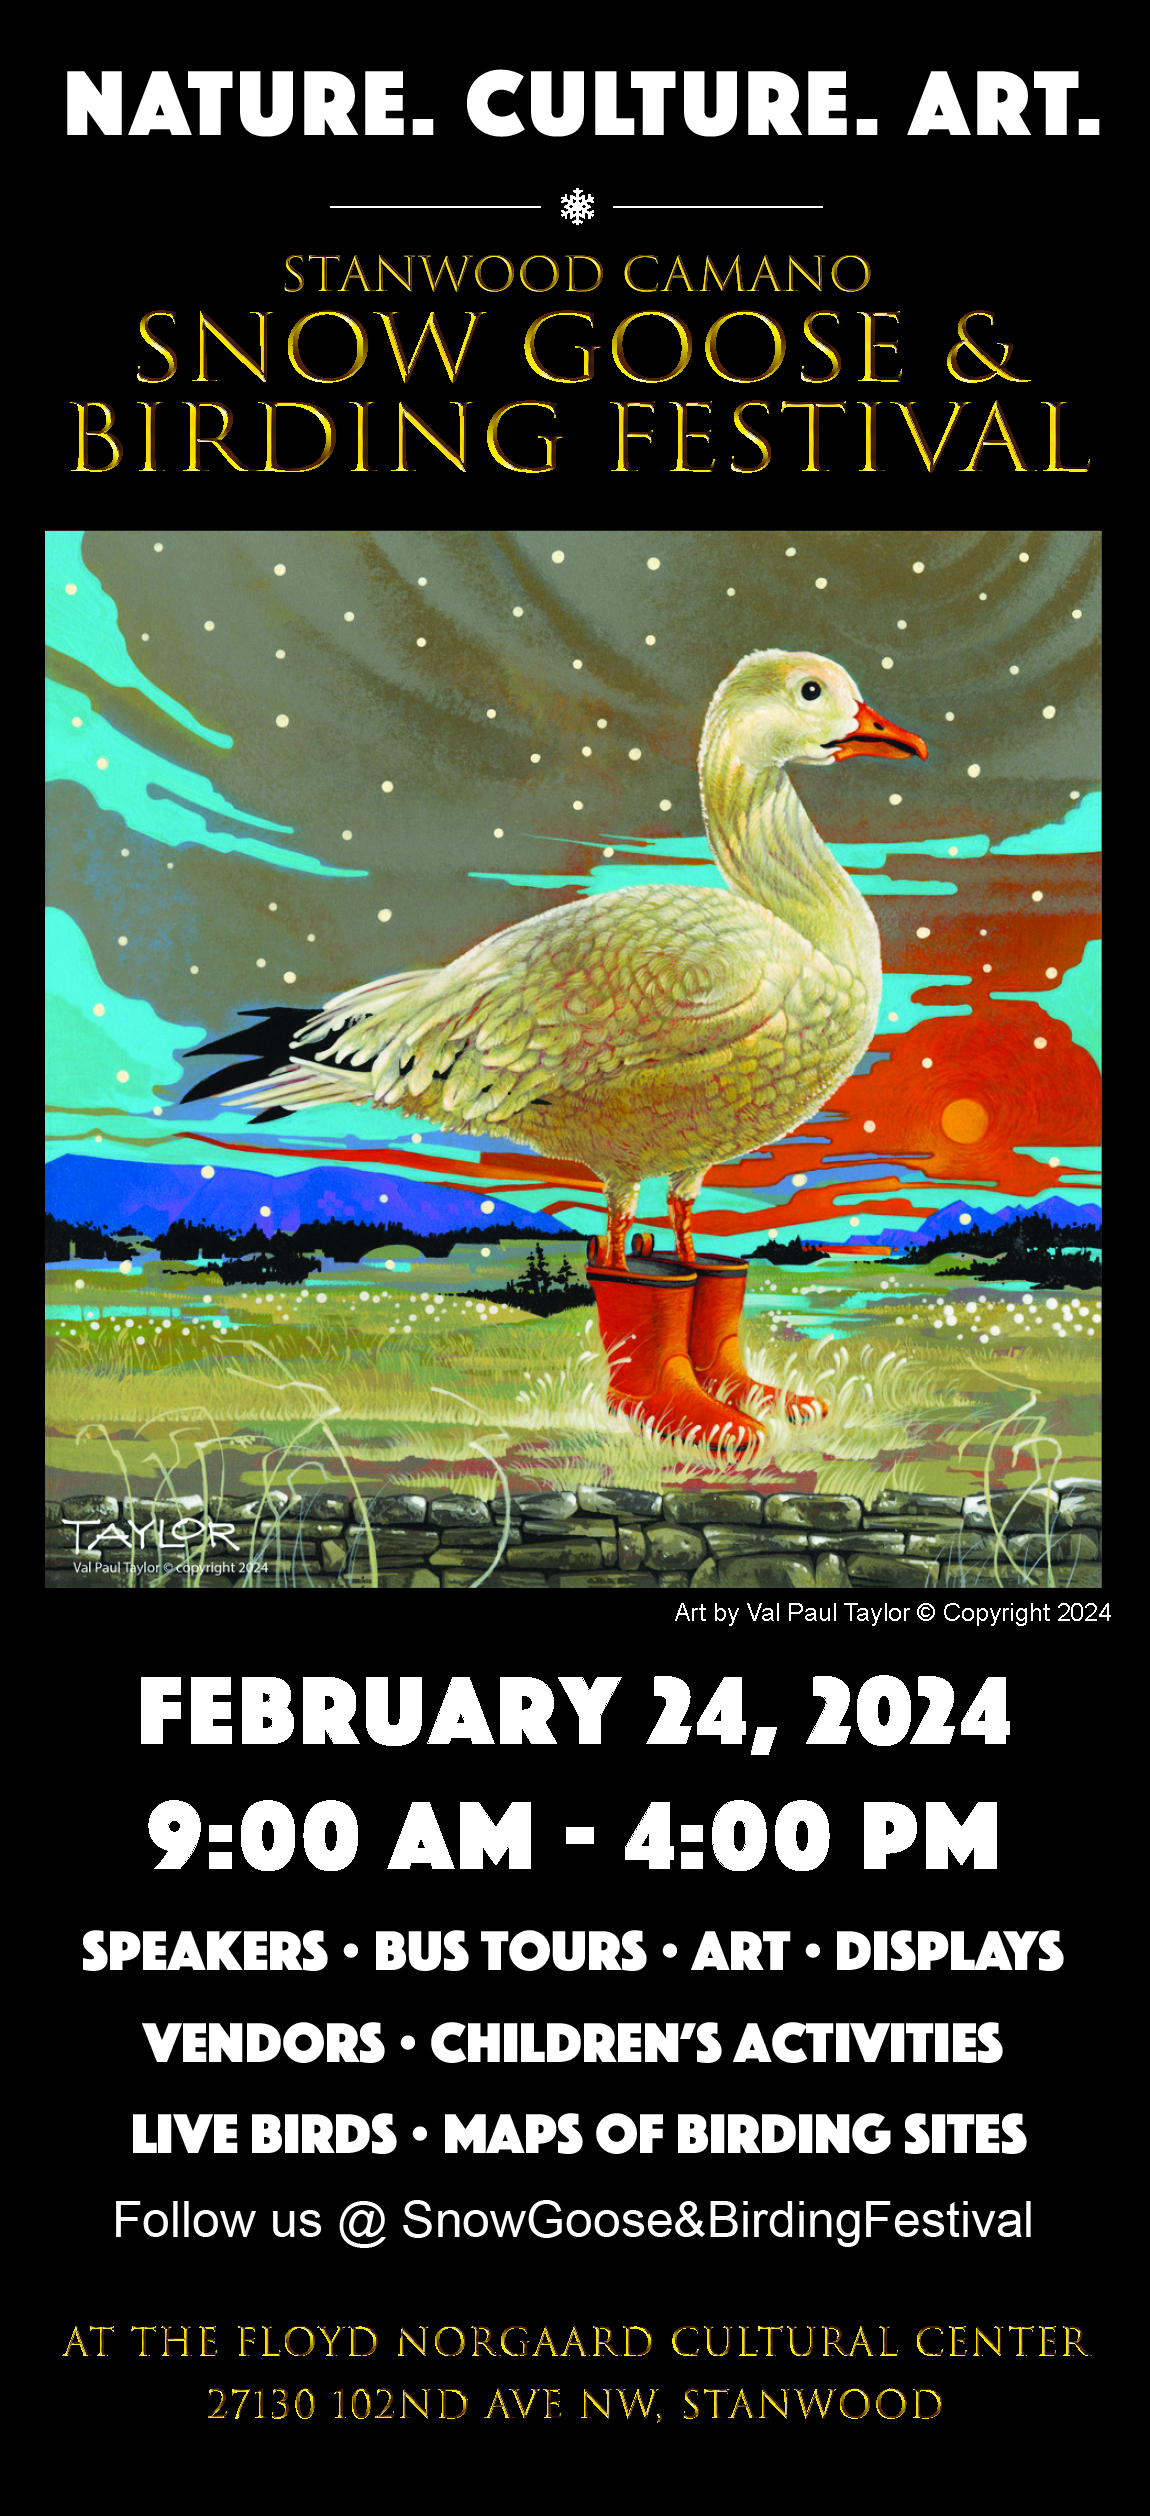 Promotional artwork for the 2024 Stanwood Camano Snow Goose & Birding Festival